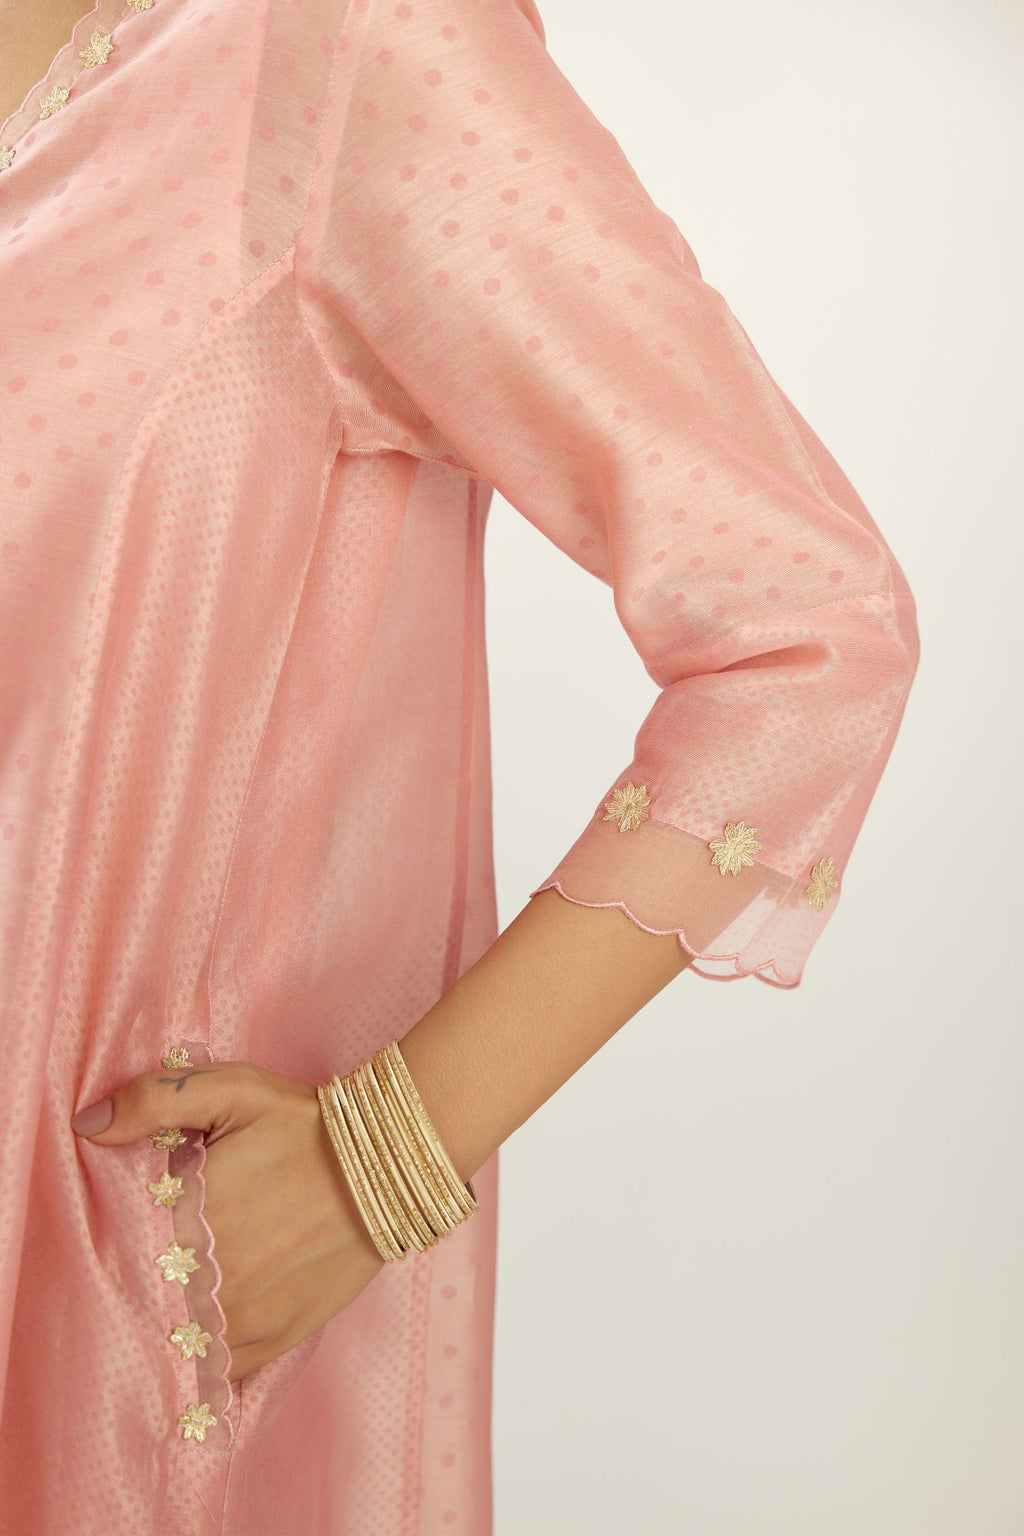 Pink A-line hand block printed silk chanderi short kurta set, highlighted with gota flower embroidery.